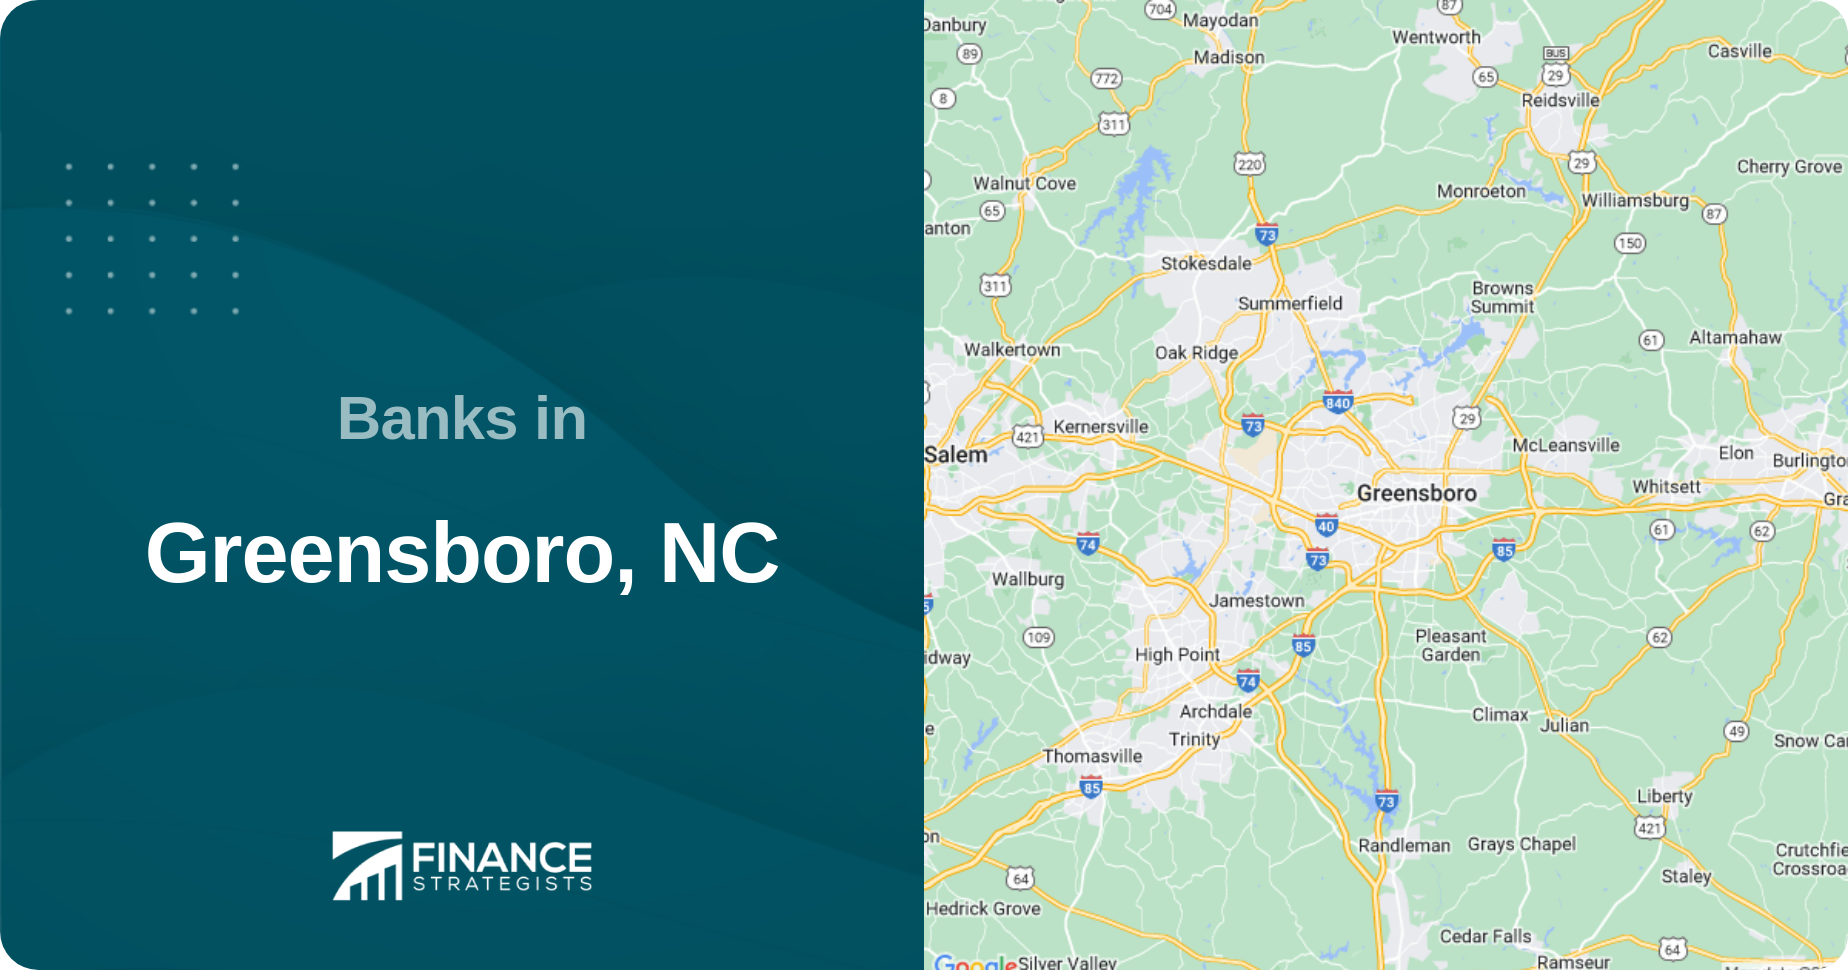 Banks in Greensboro, NC